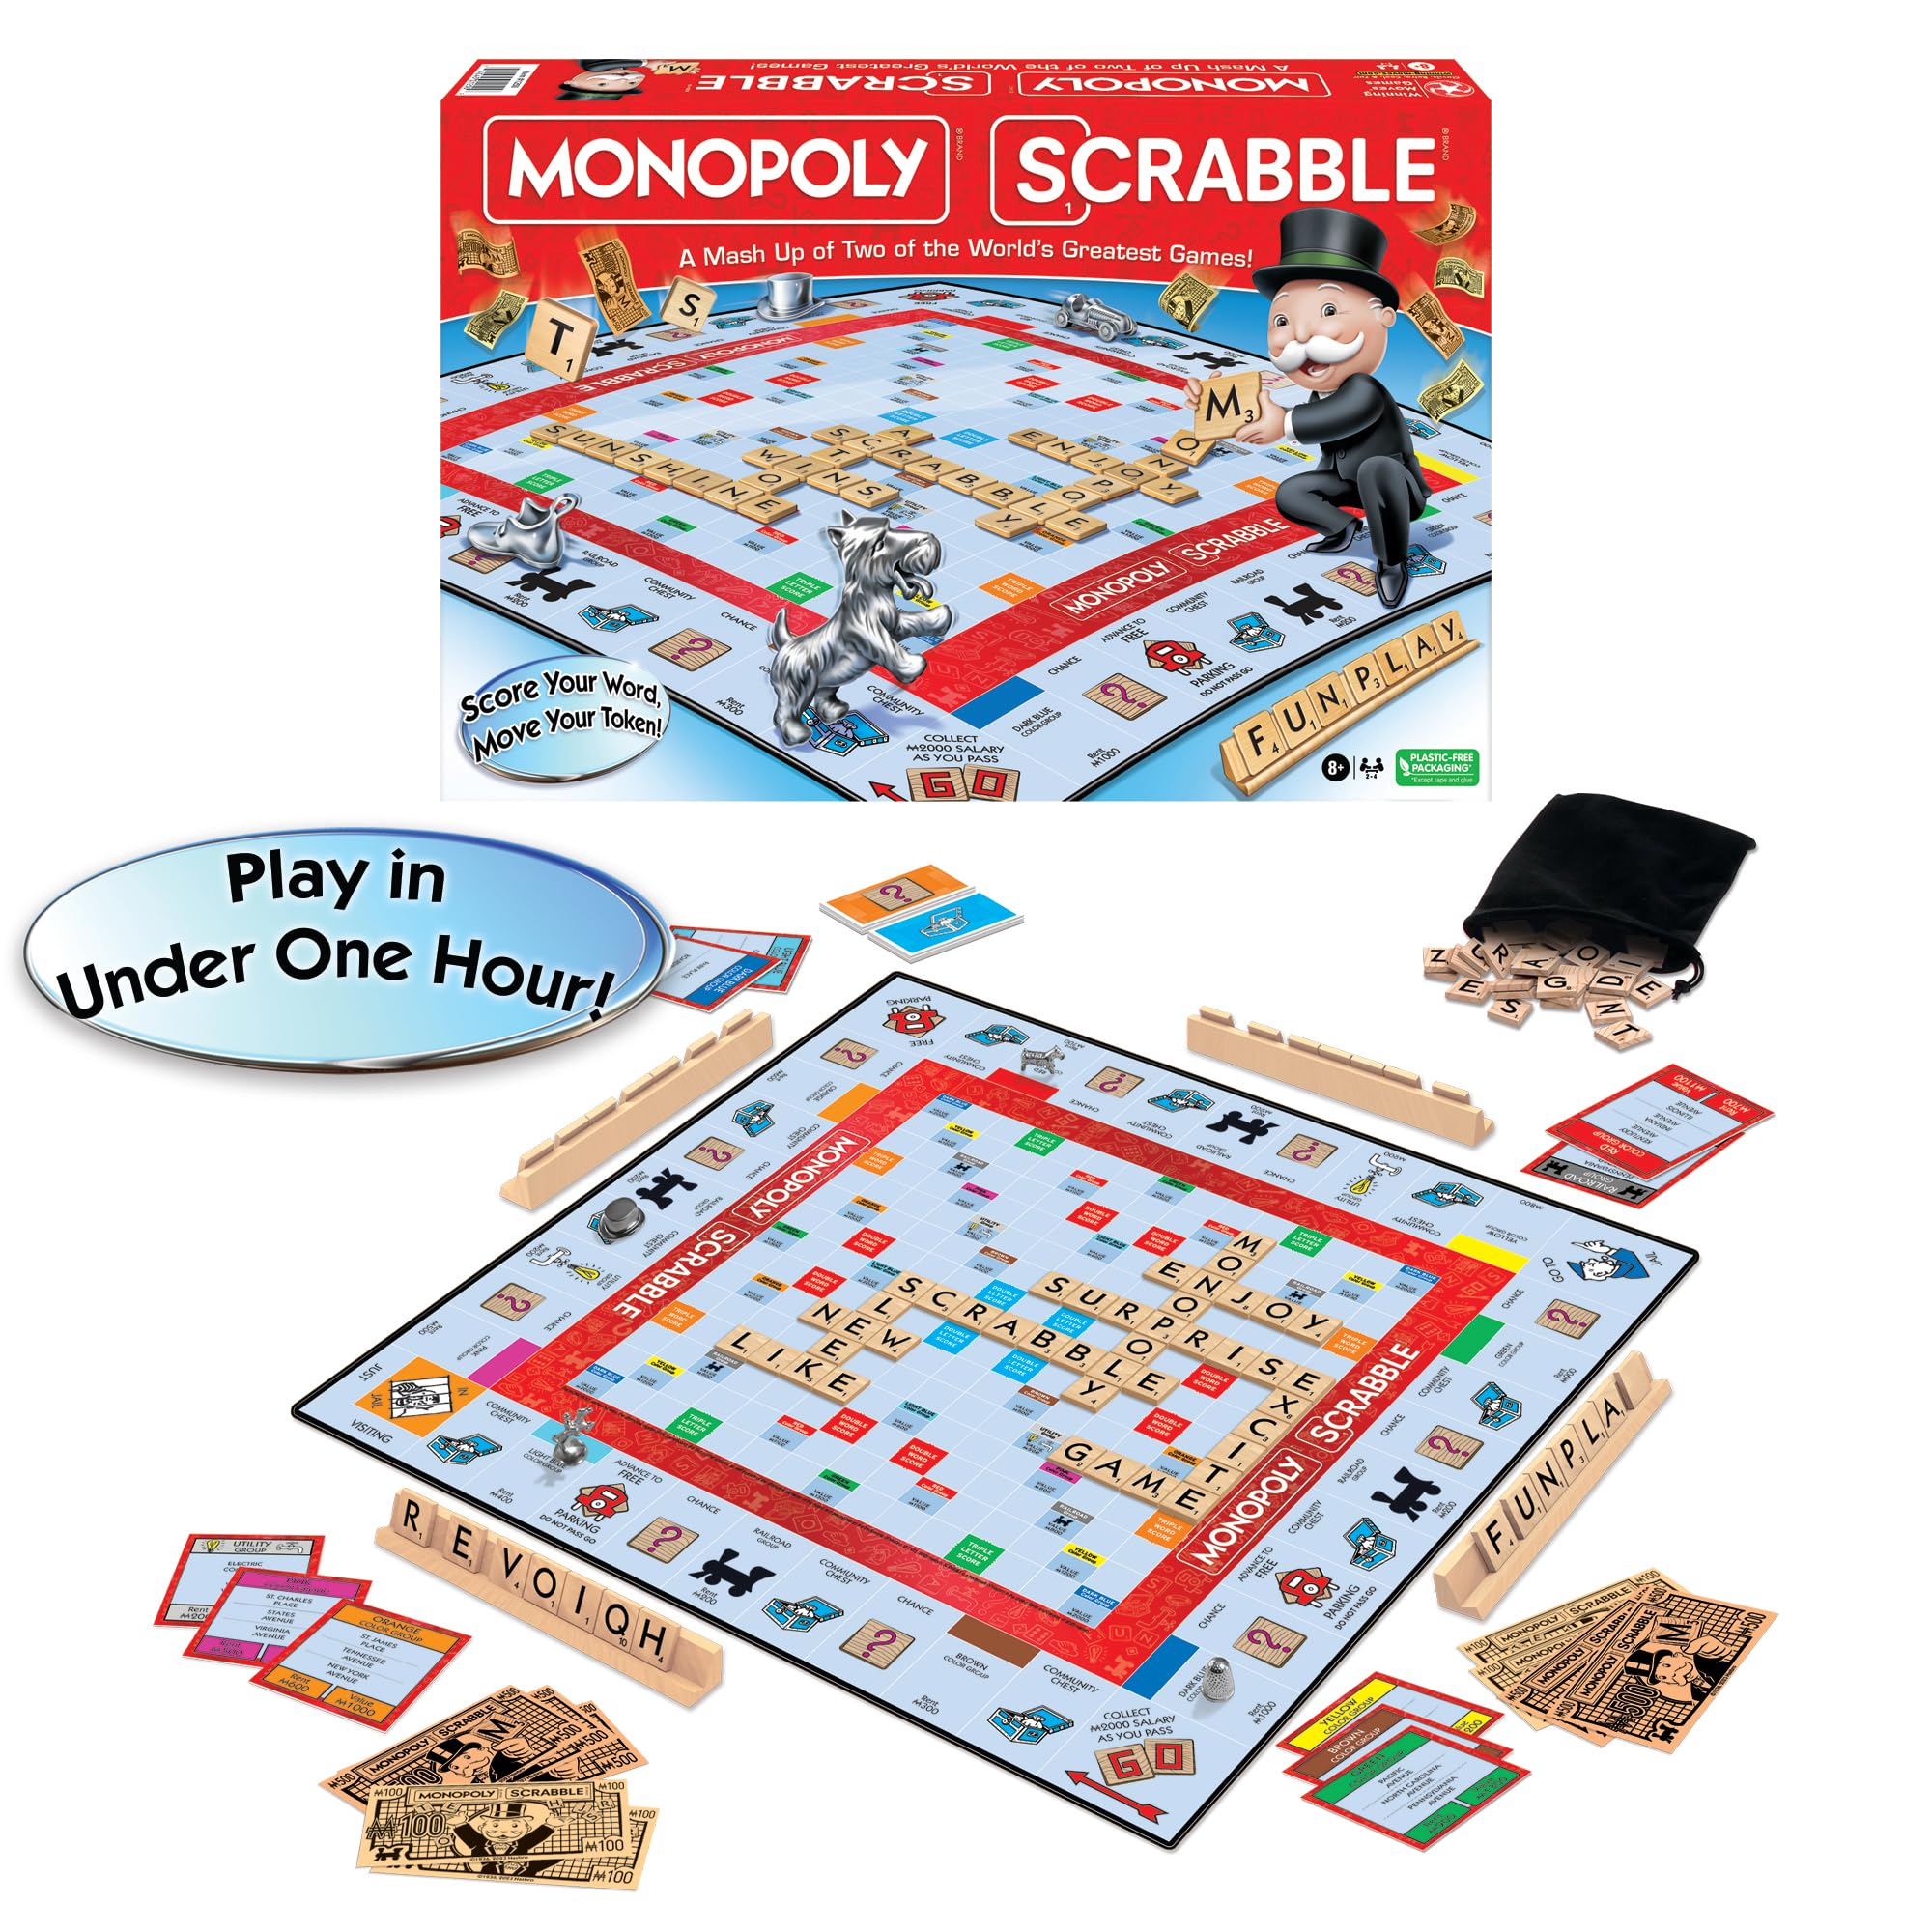 Monopoly Scrabble